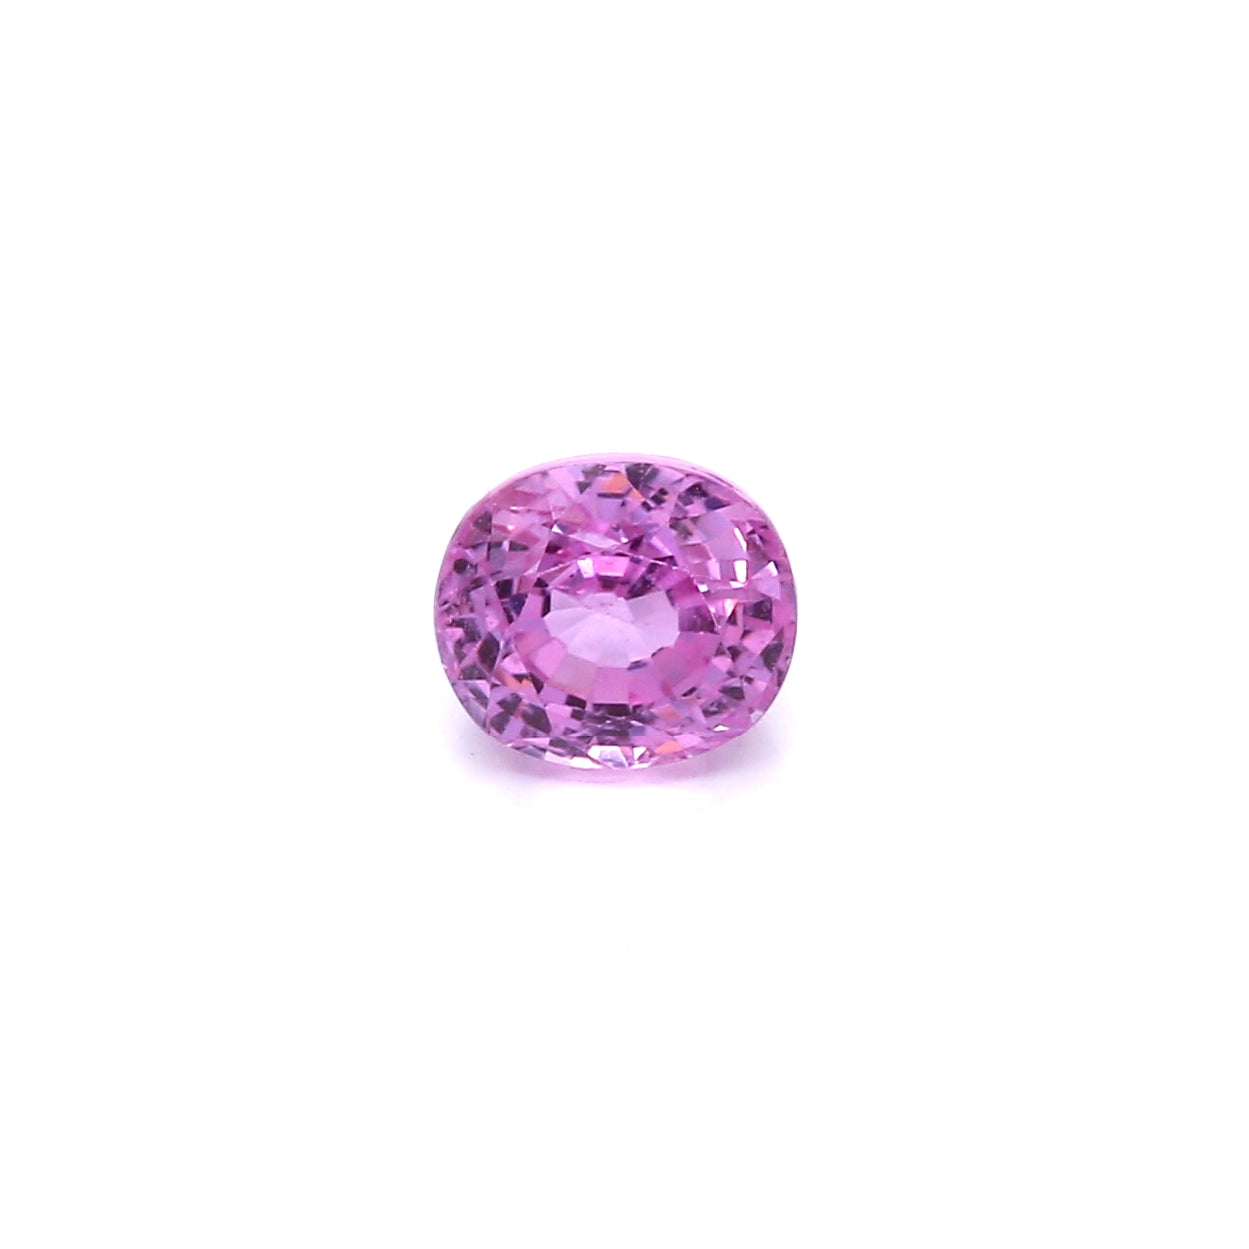 1.46ct Purplish Pink, Oval Sapphire, Heated, Madagascar - 6.32 x 5.65 x 4.52mm